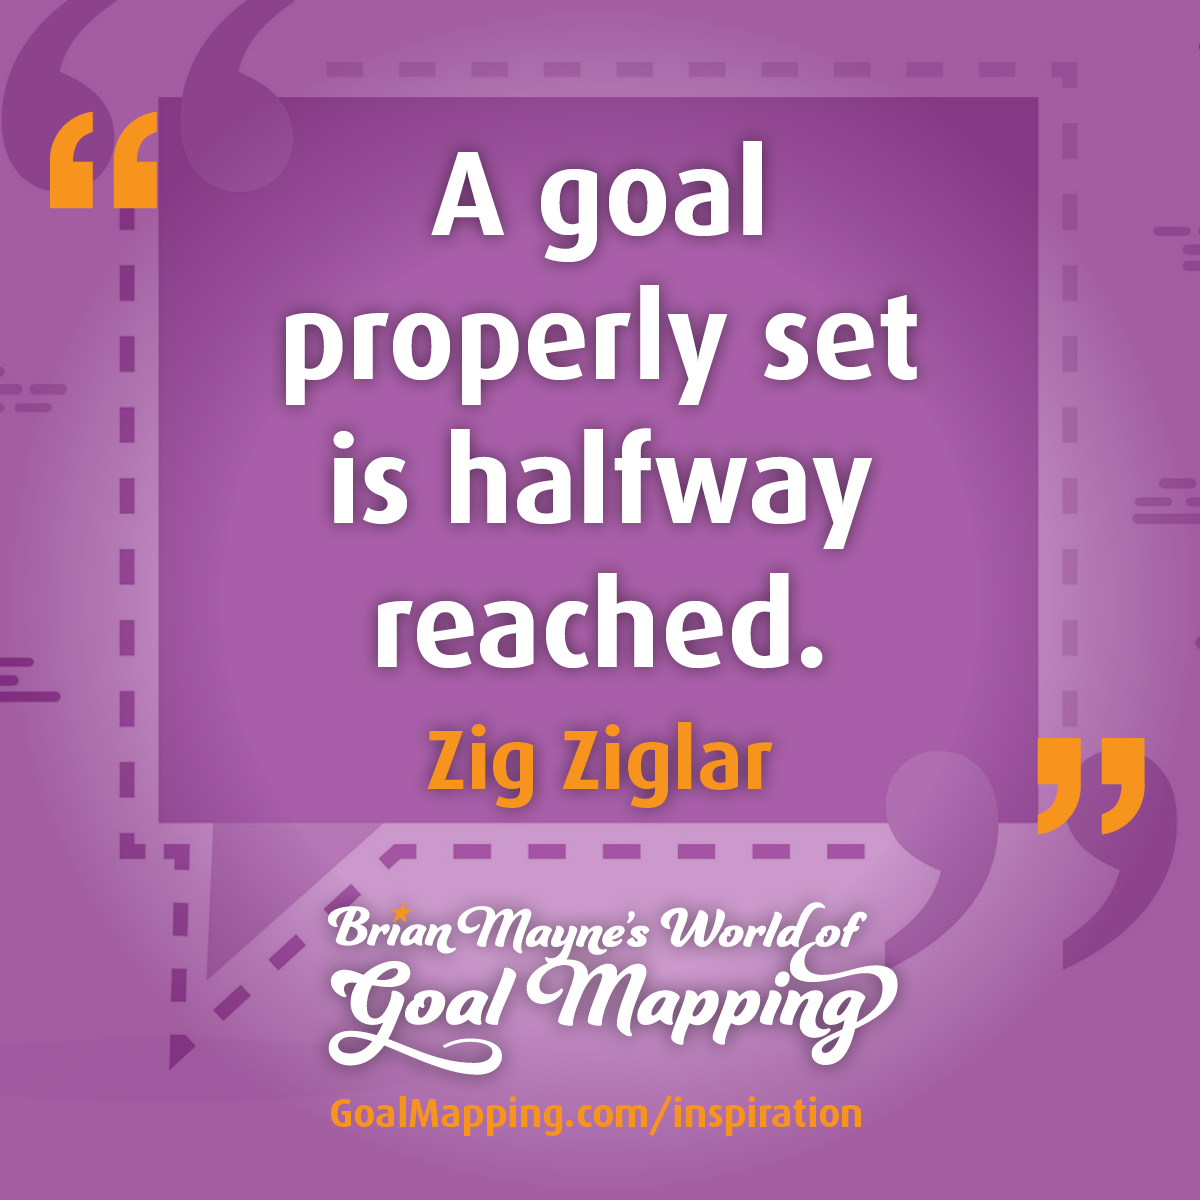 "A goal properly set is halfway reached." Zig Ziglar